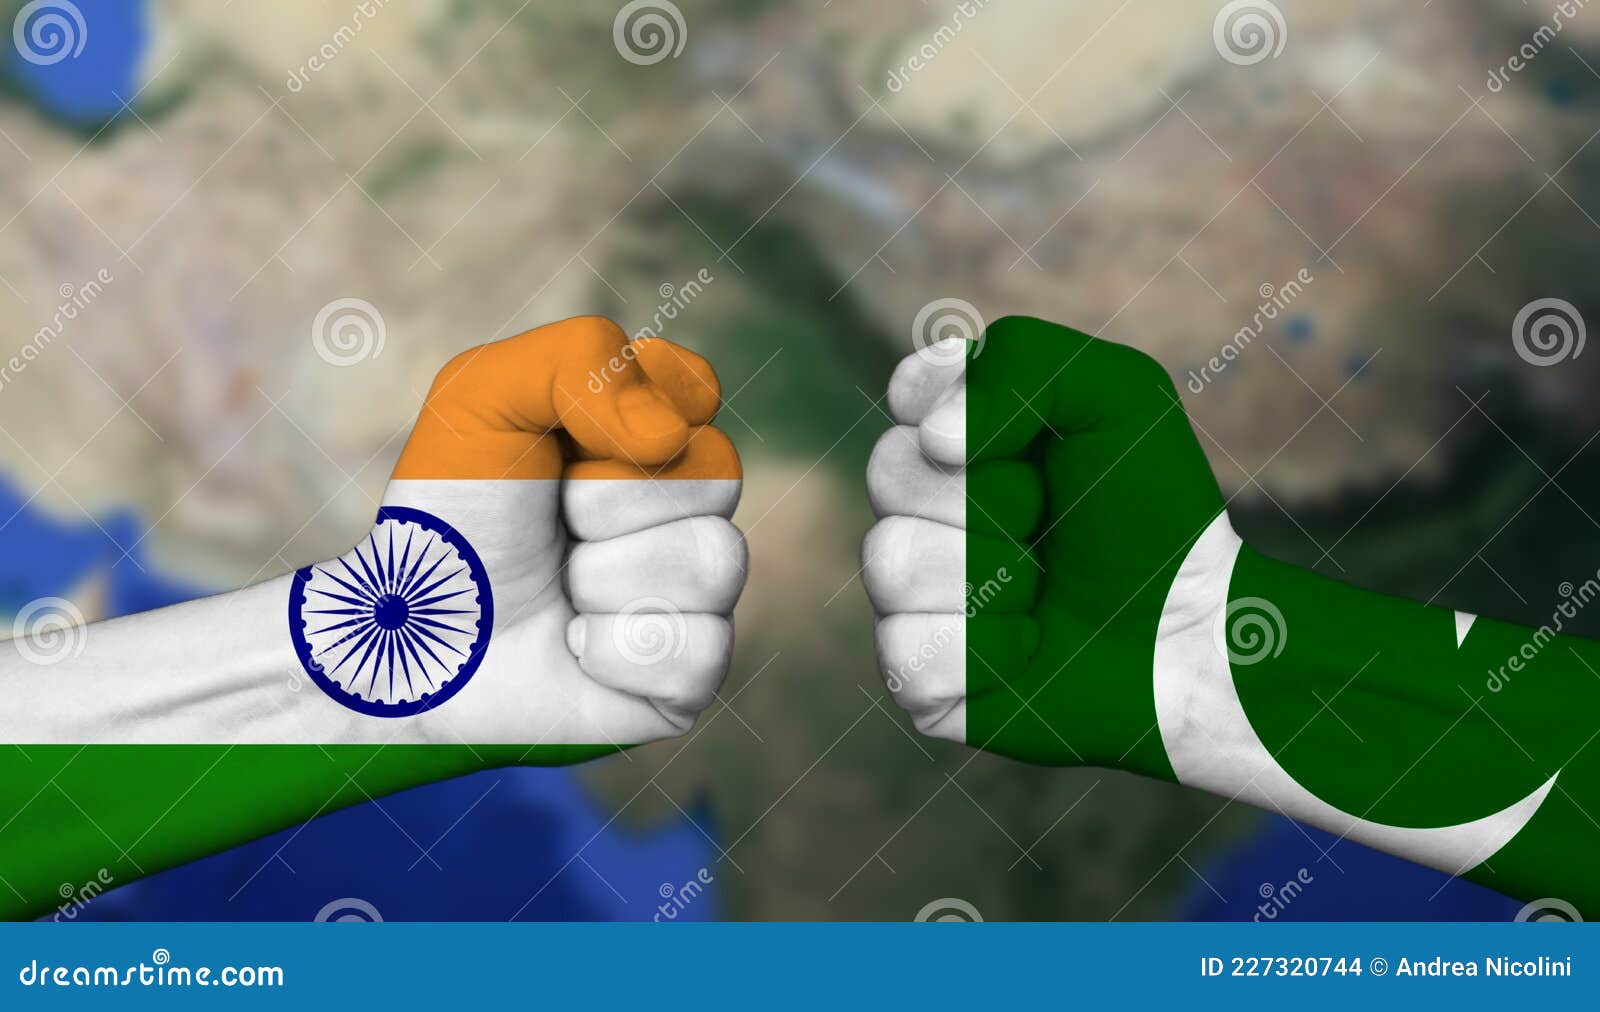 india vs, versus pakistan. conflict and tensions between india and pakistan